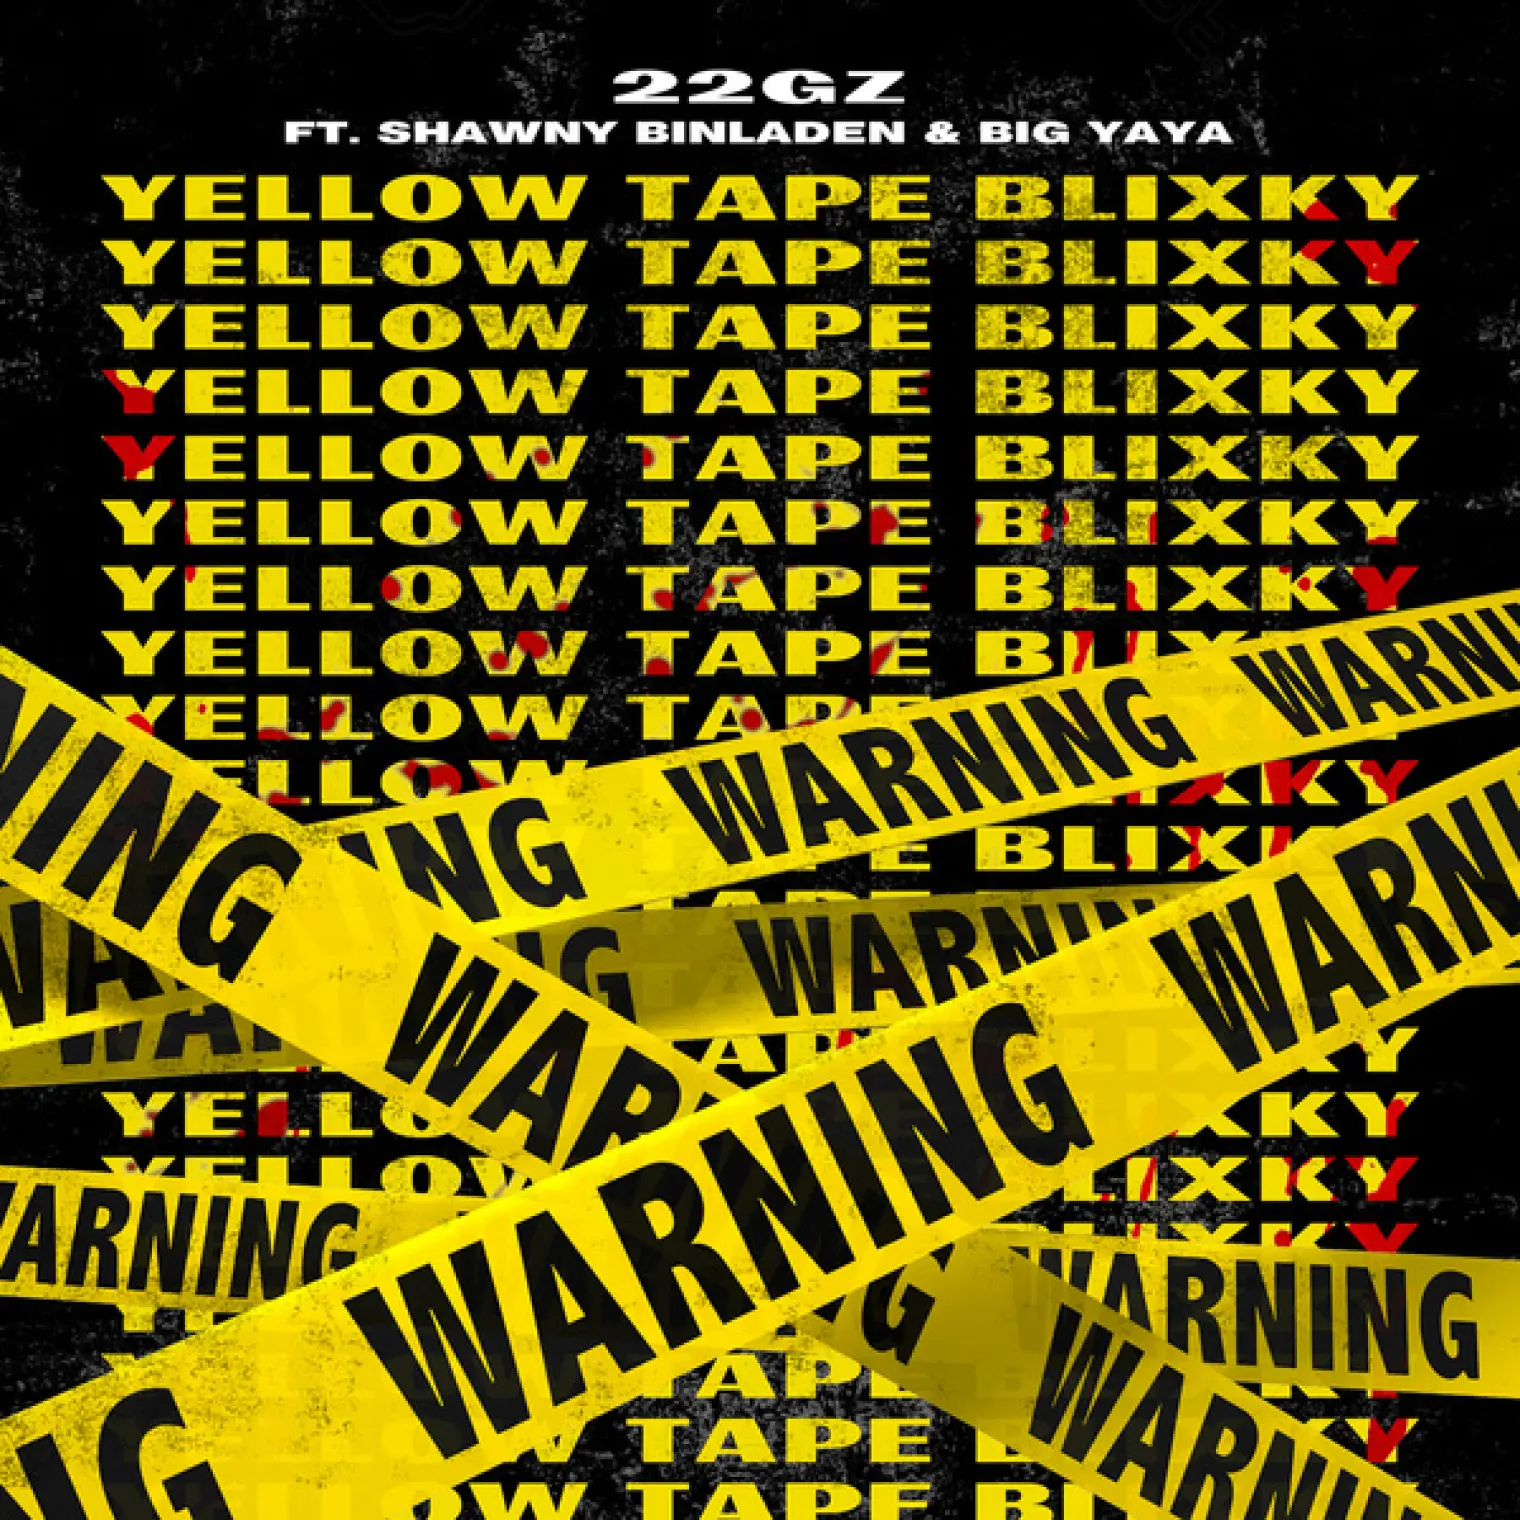 YTB (Yellow Tape Blixky) (feat. Shawny Binladen & Big Yaya) -  22Gz 